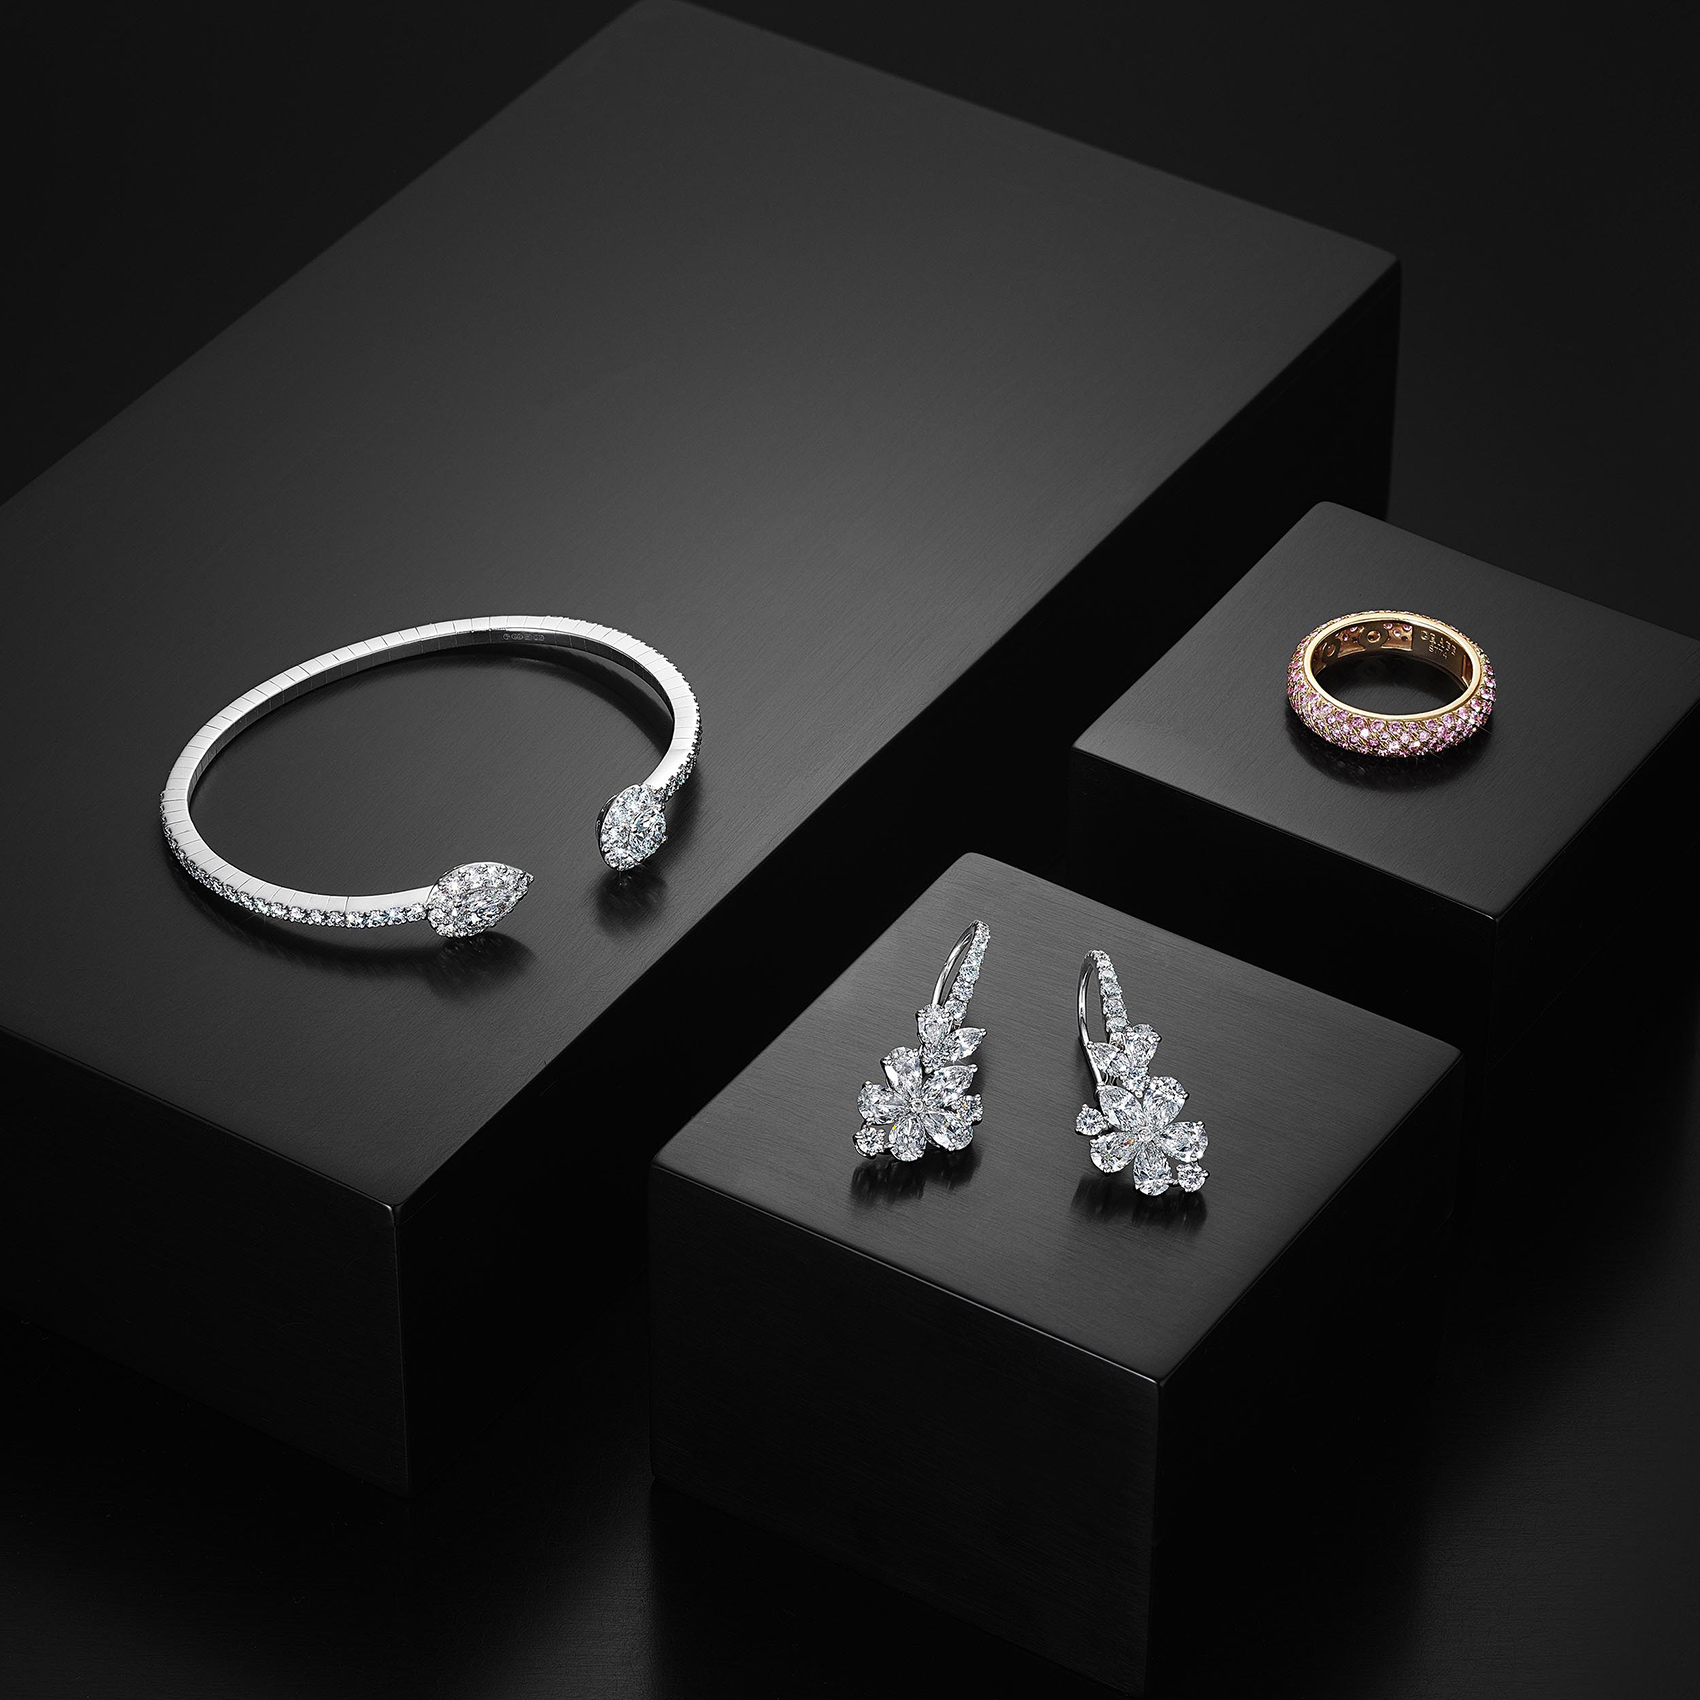 Three Diamond Jewelry Pieces on Boxes